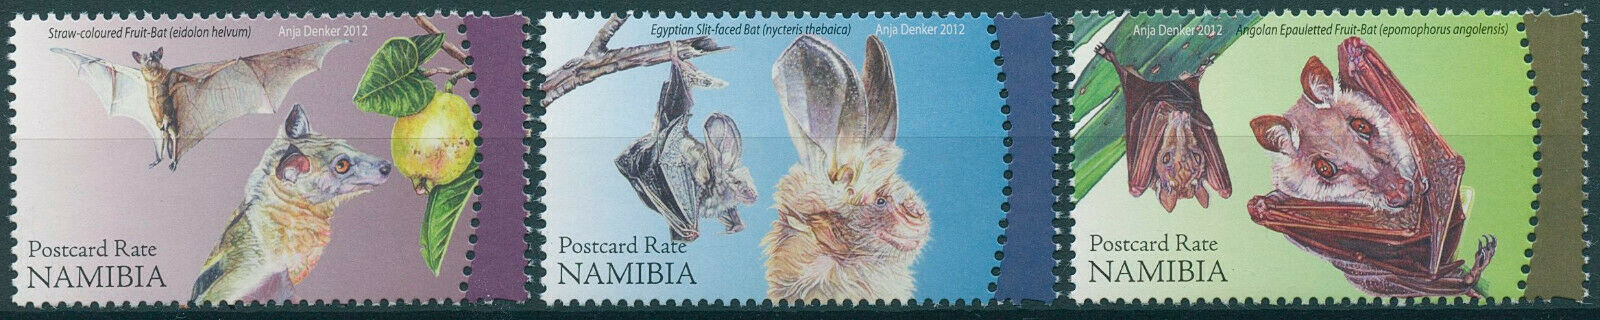 Namibia 2012 MNH Wild Animals Stamps Bats Flying Mammals Fruit Bat 3v Set